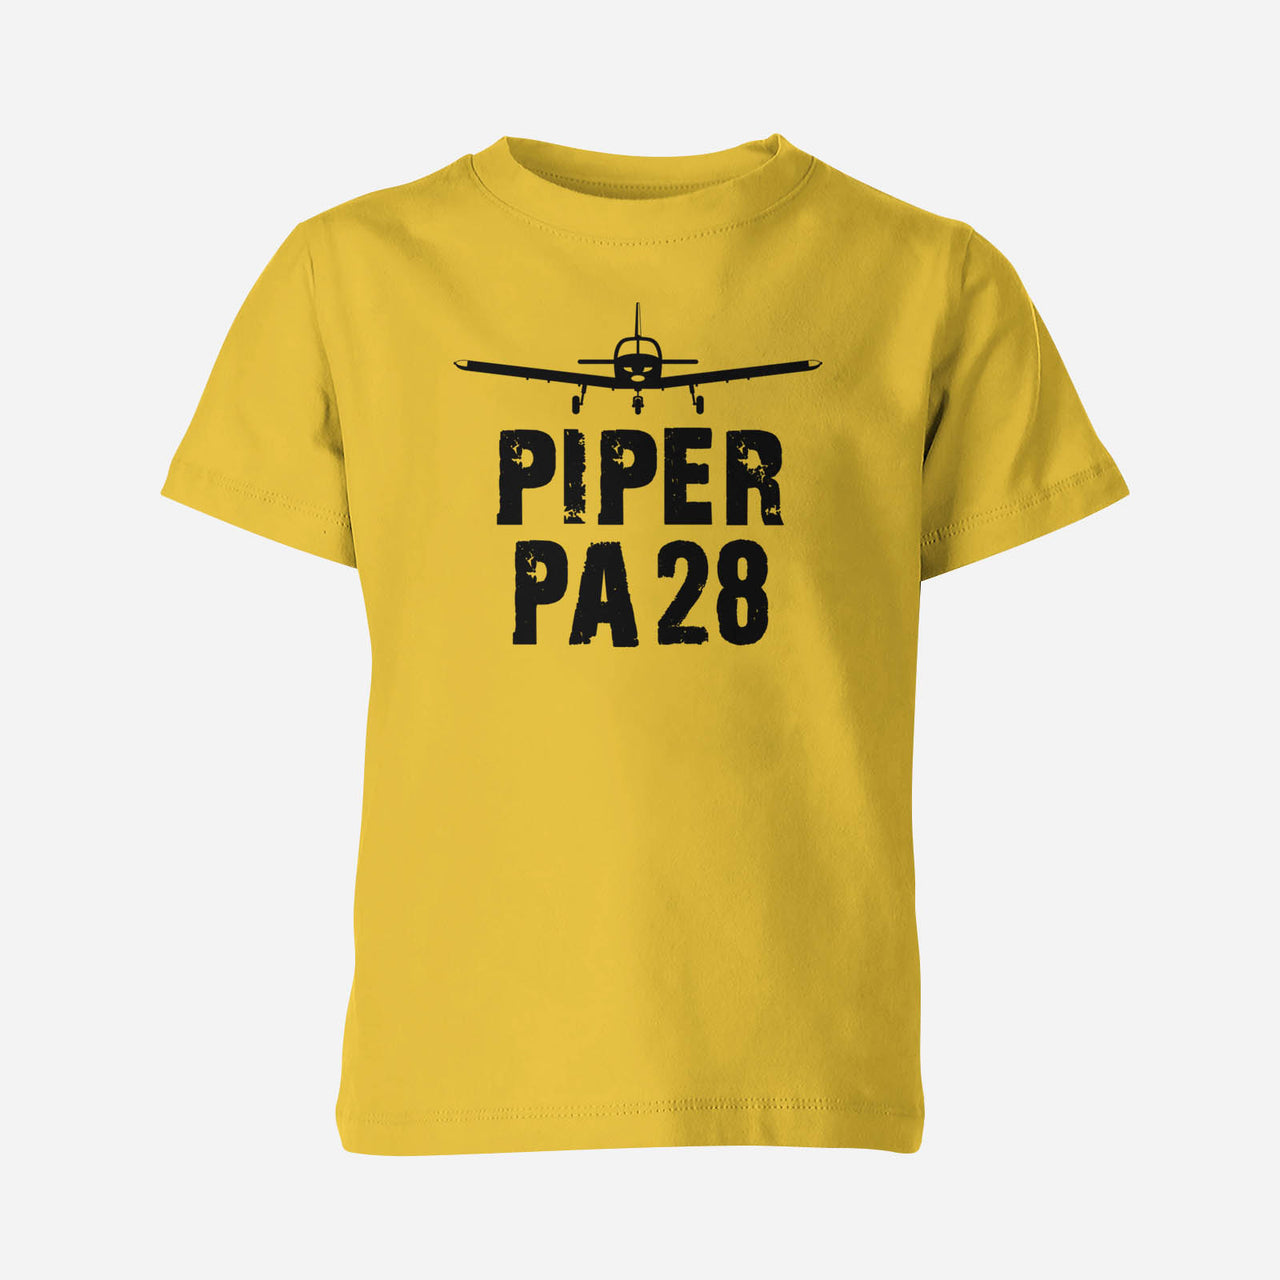 Piper PA28 & Plane Designed Children T-Shirts